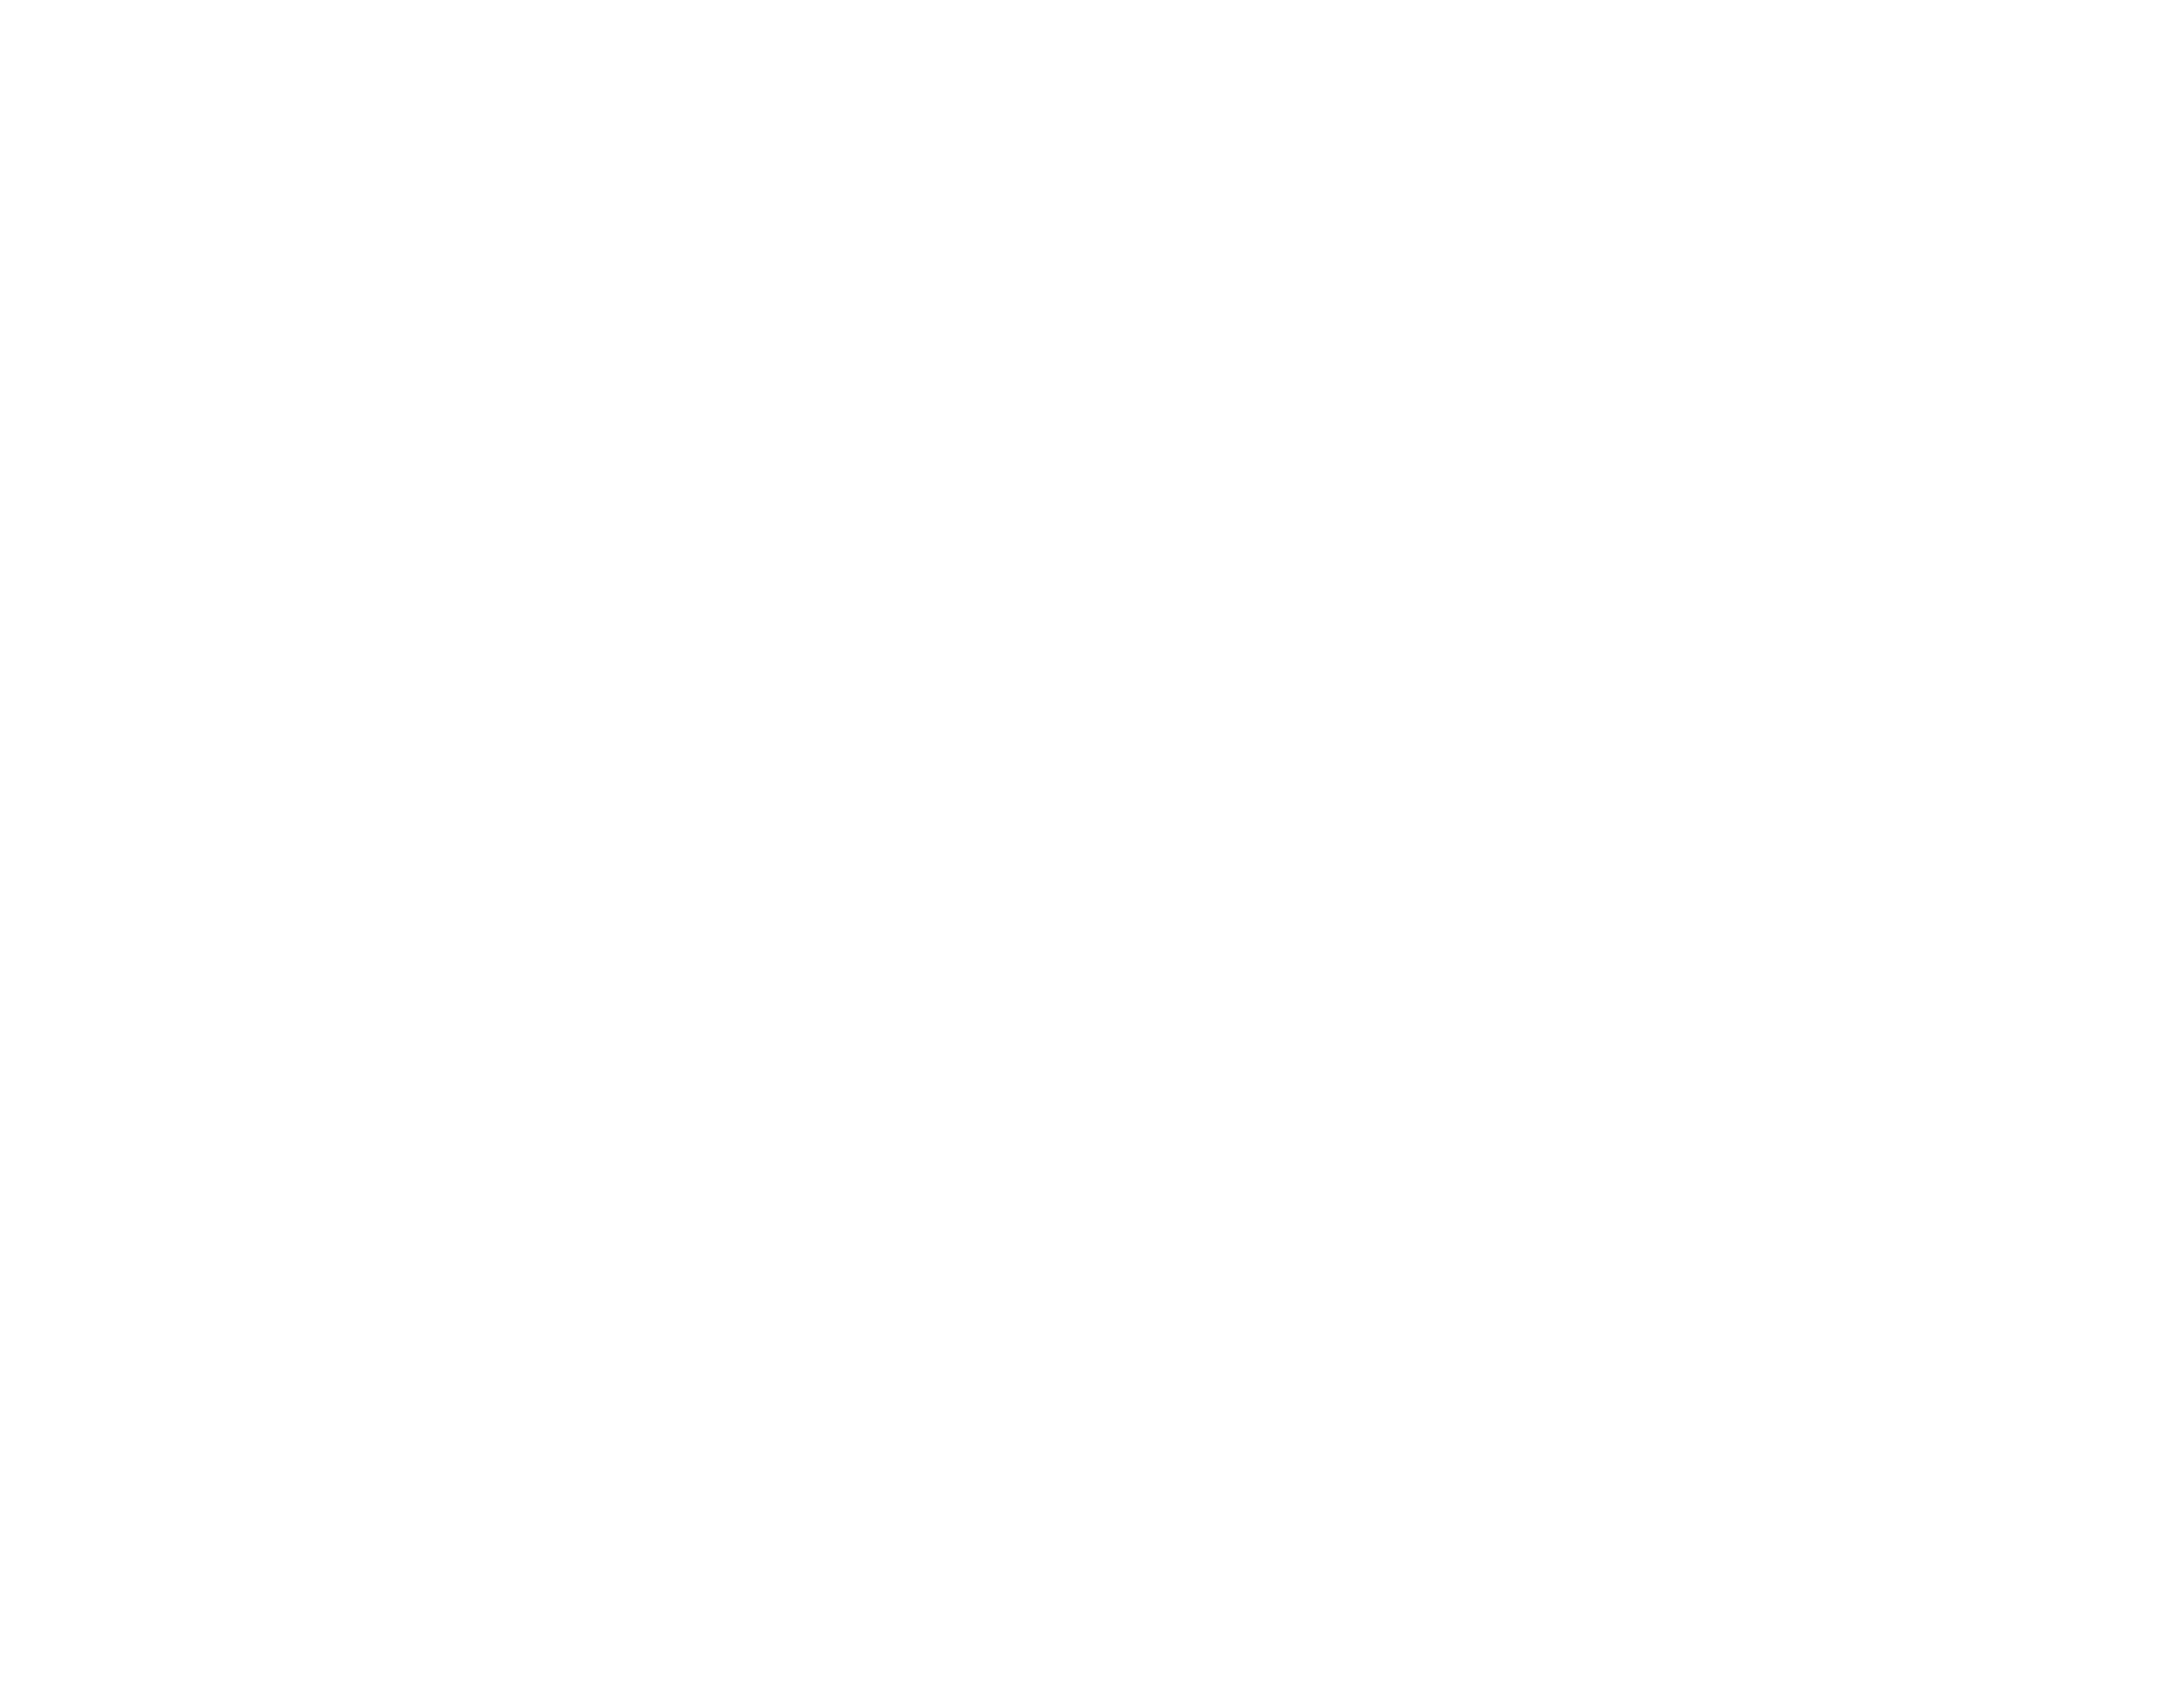 Rawnut